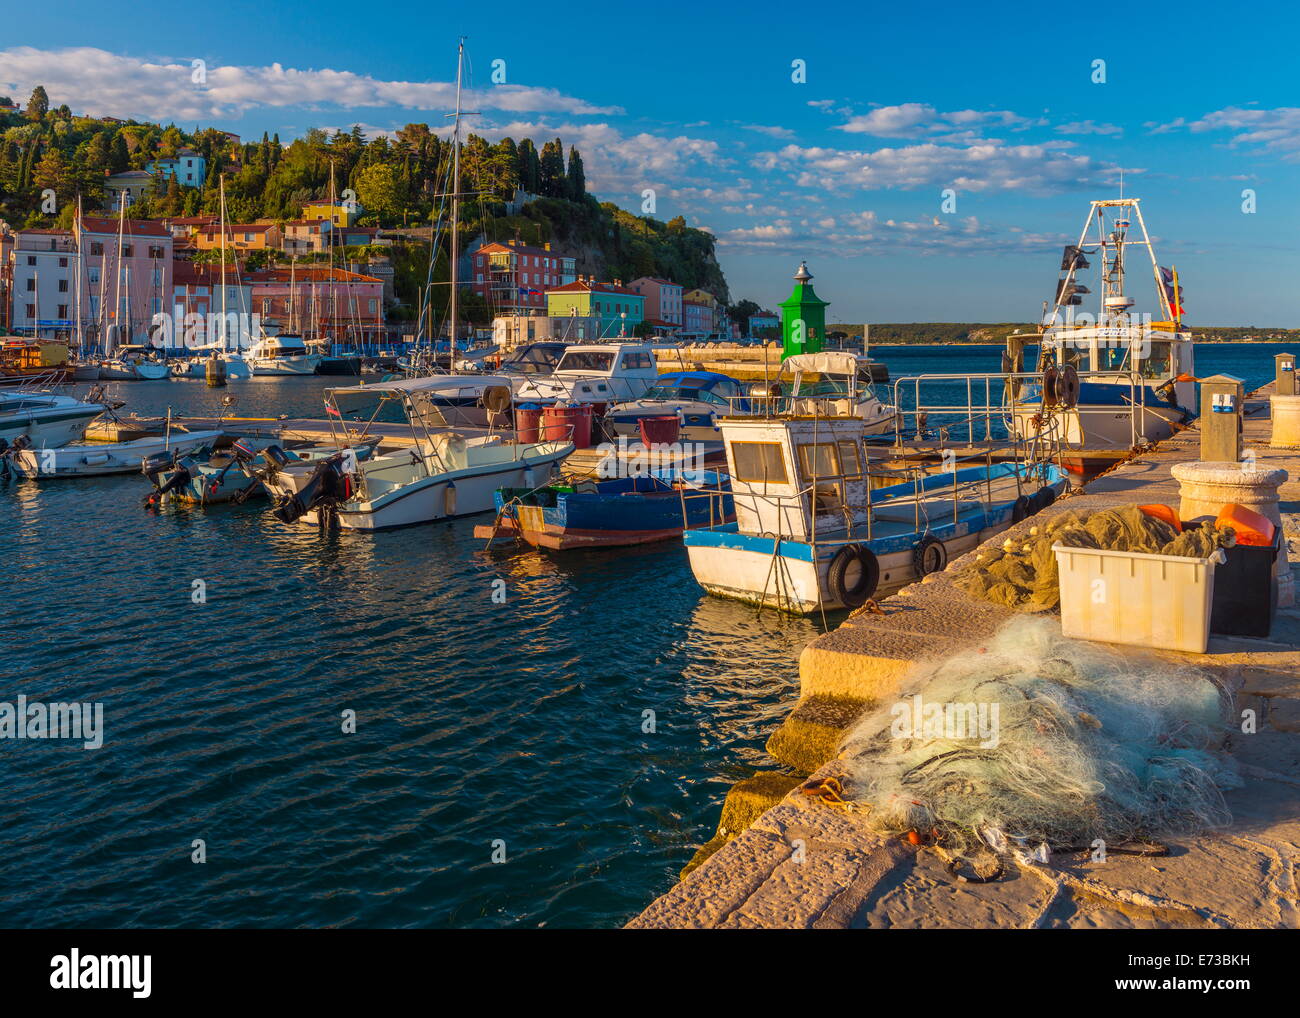 Fishing nets and fishing boats, Old Town Harbour, Piran, Primorska, Slovenian Istria, Slovenia, Europe Stock Photo